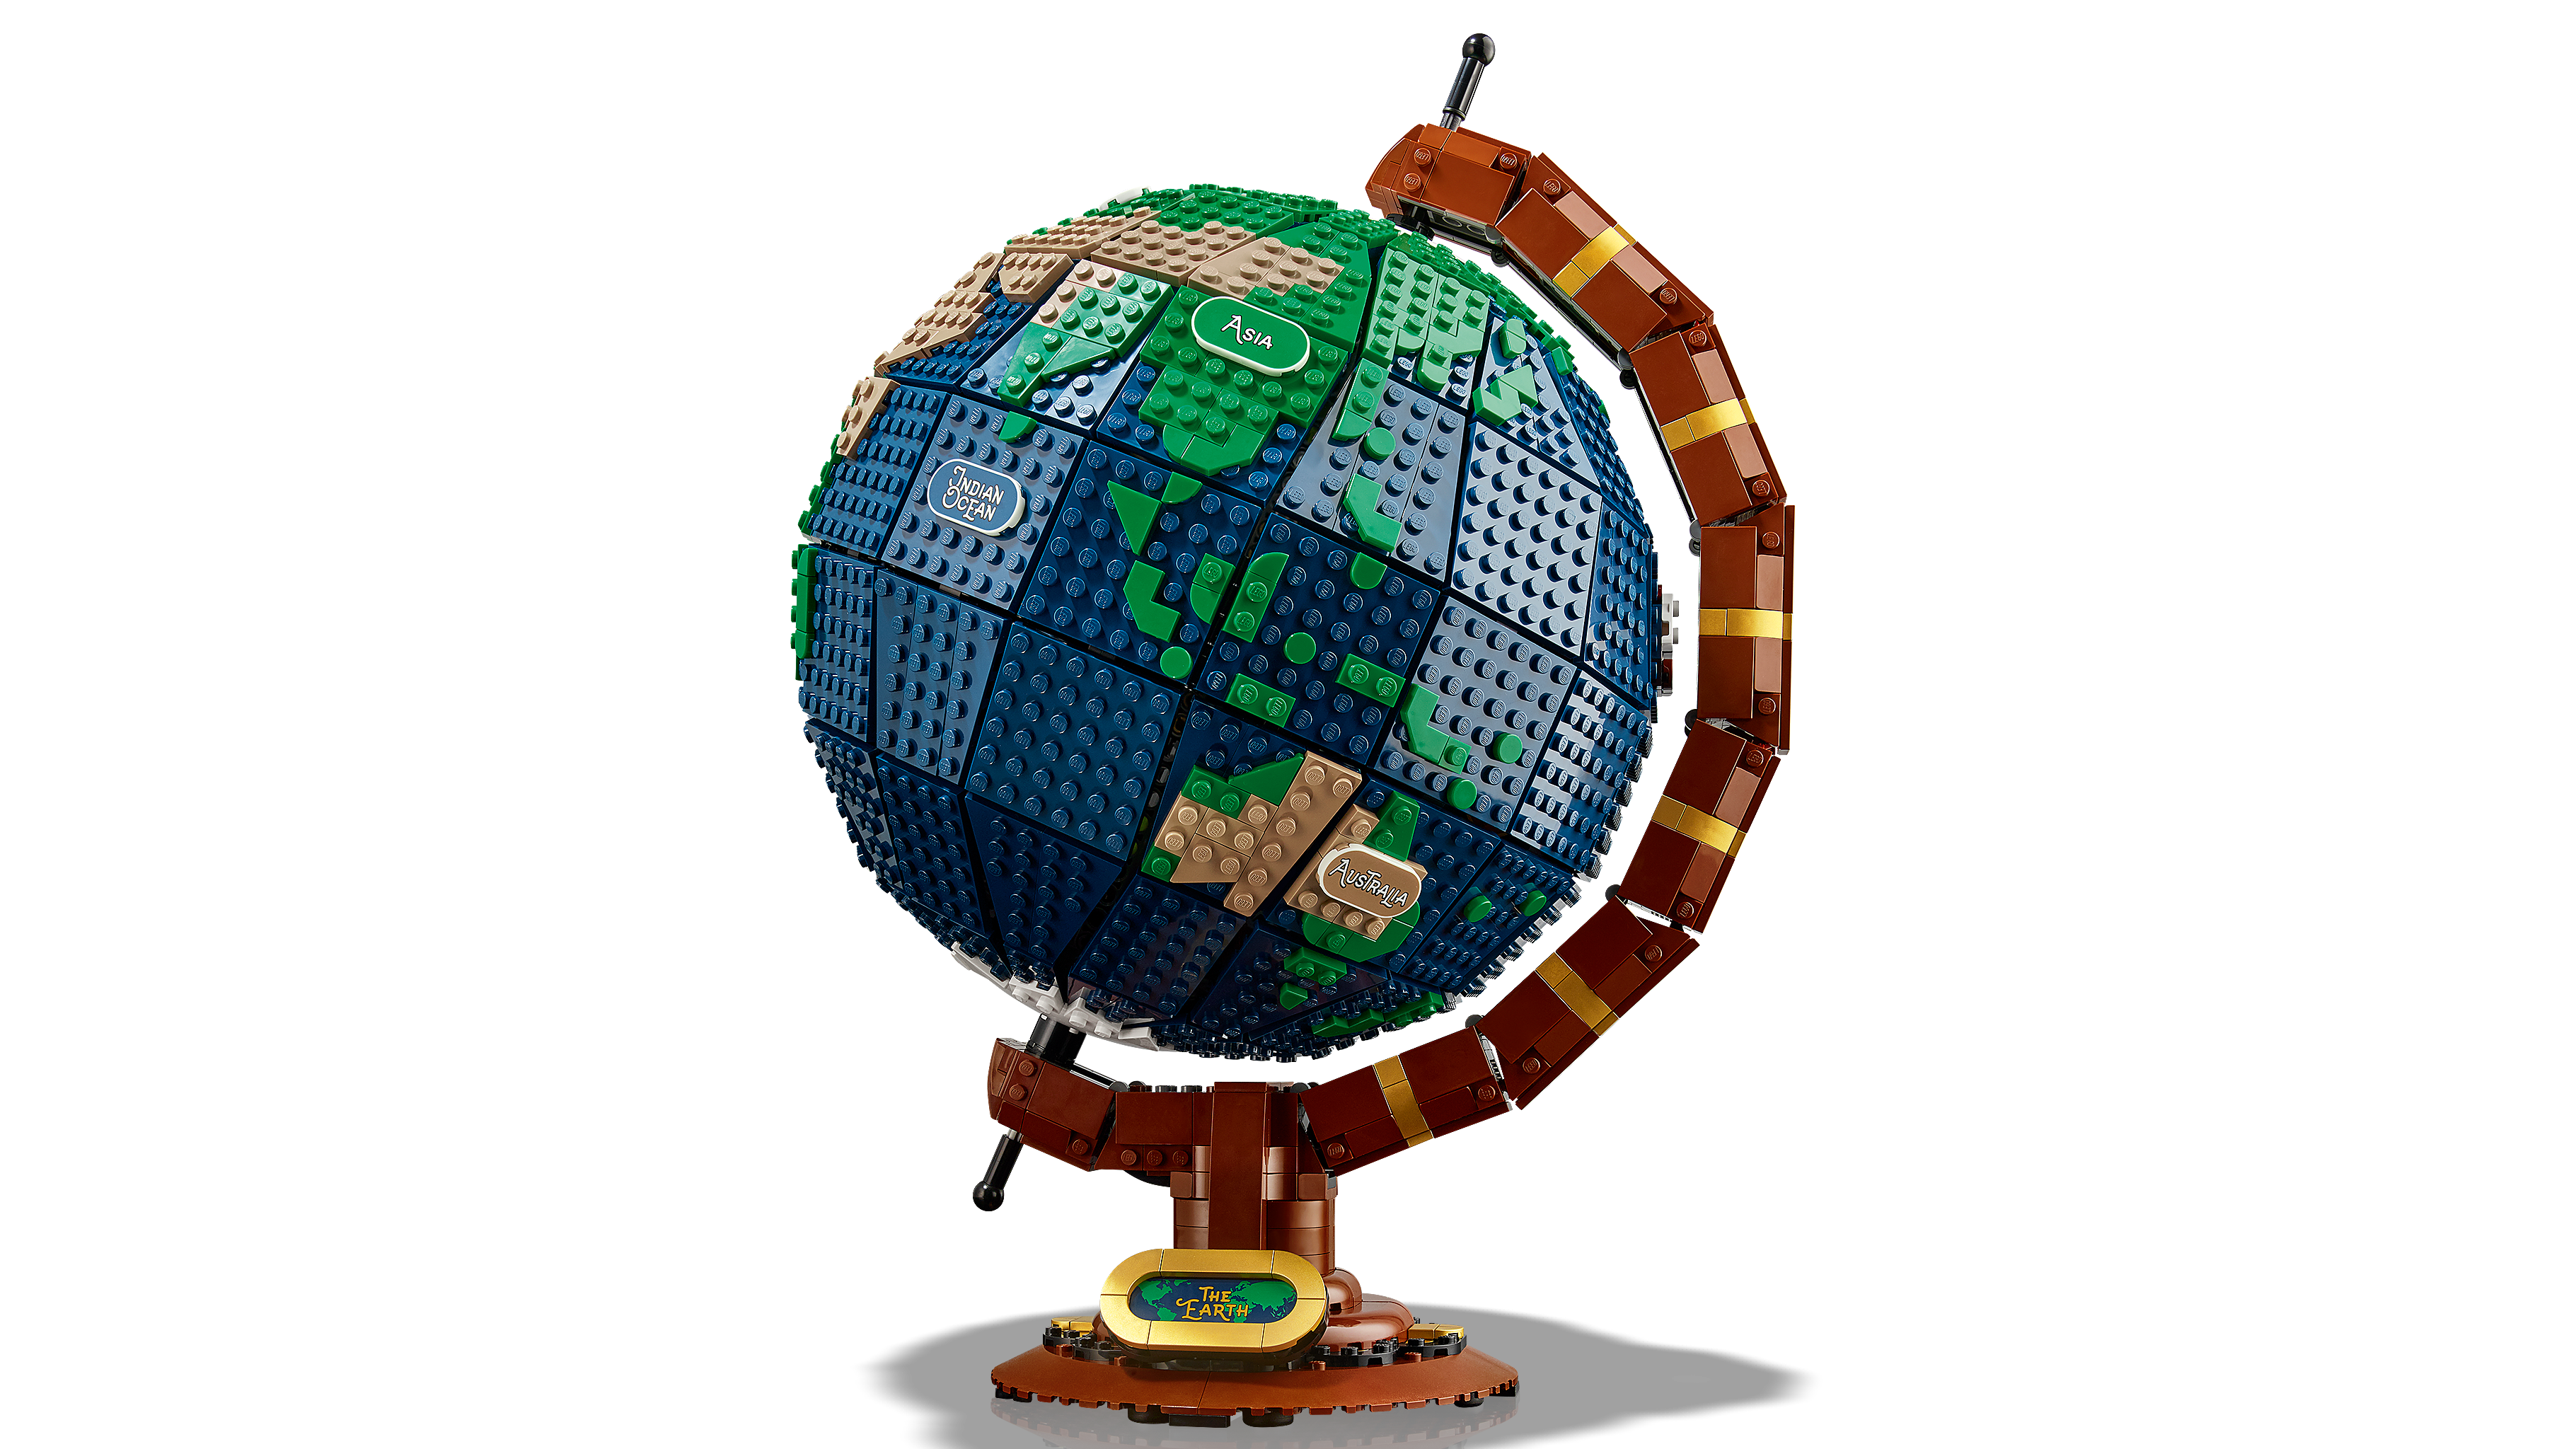 LEGO IDEAS - LEGO Earth Globe